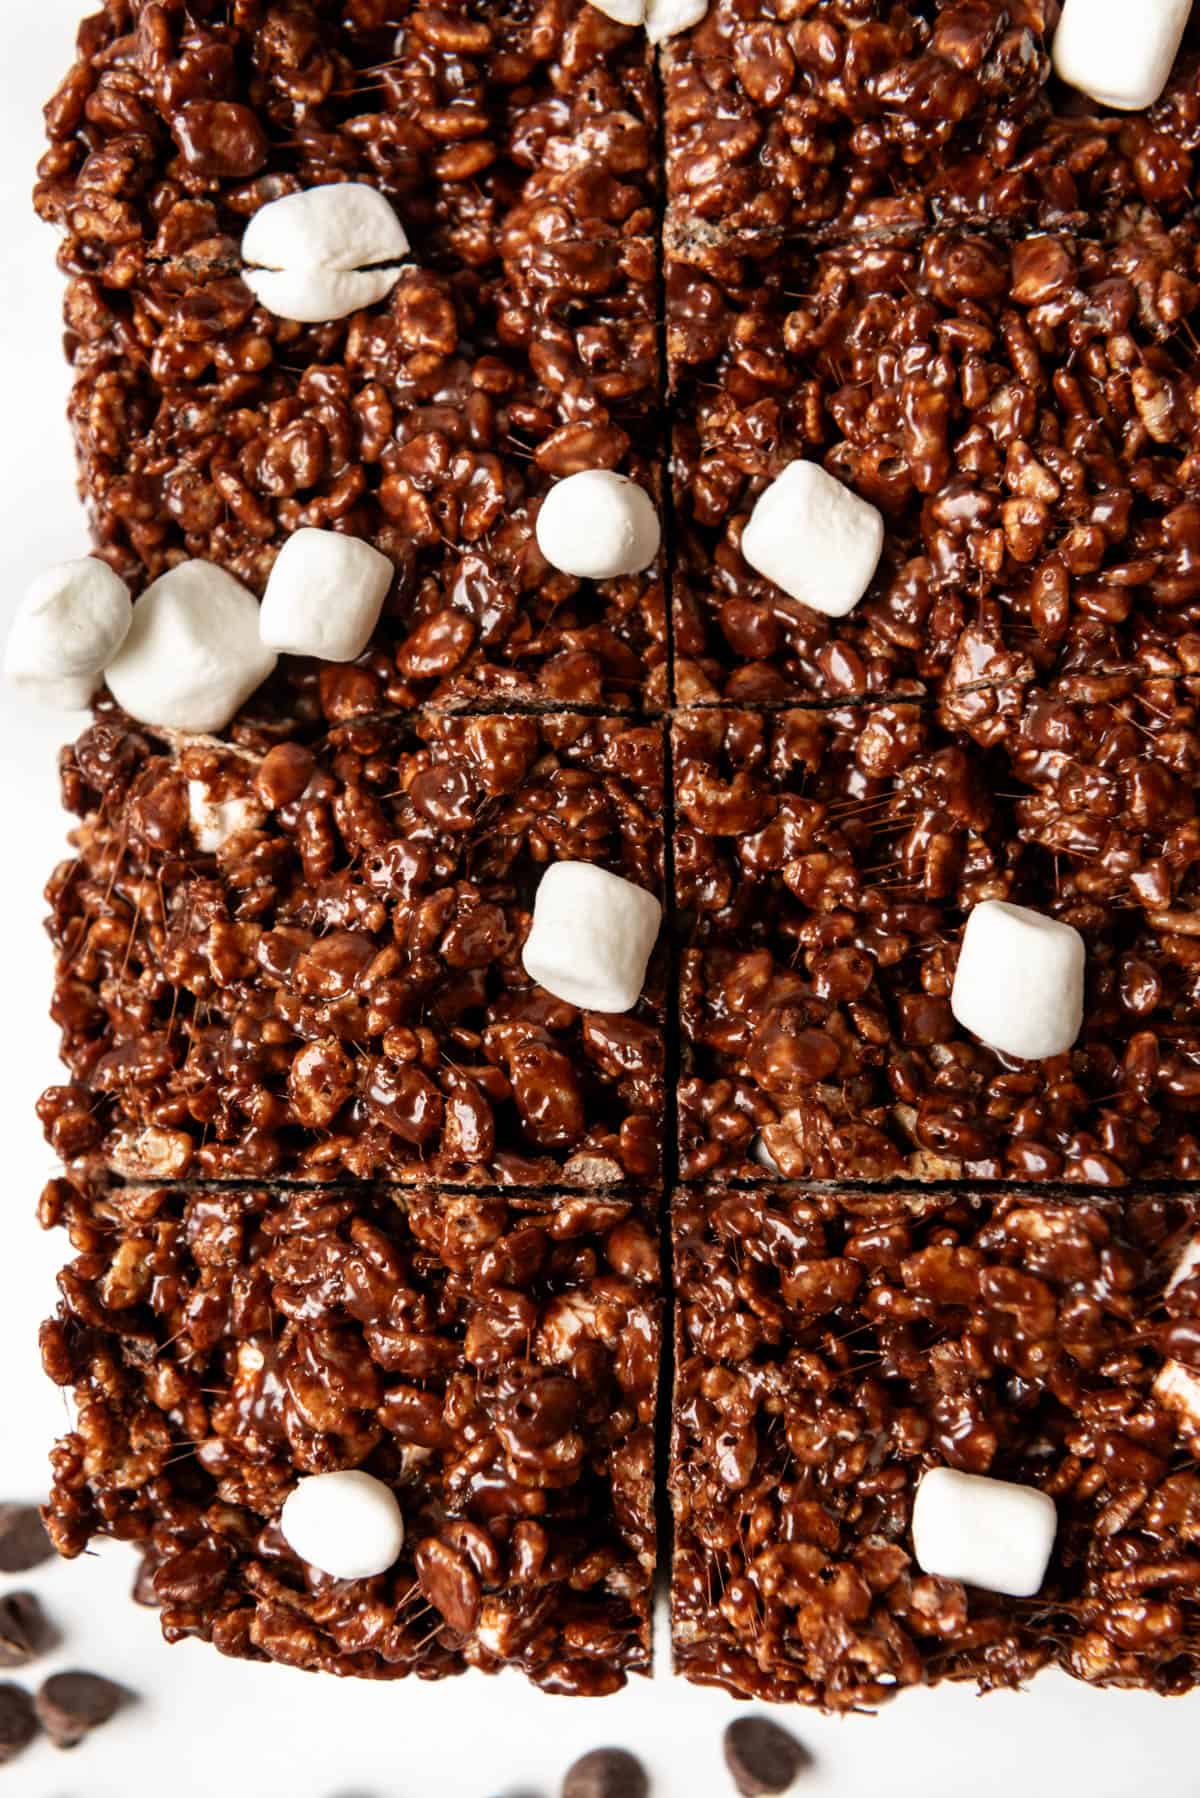 Gooey chocolate rice krispies treats cut into squares.